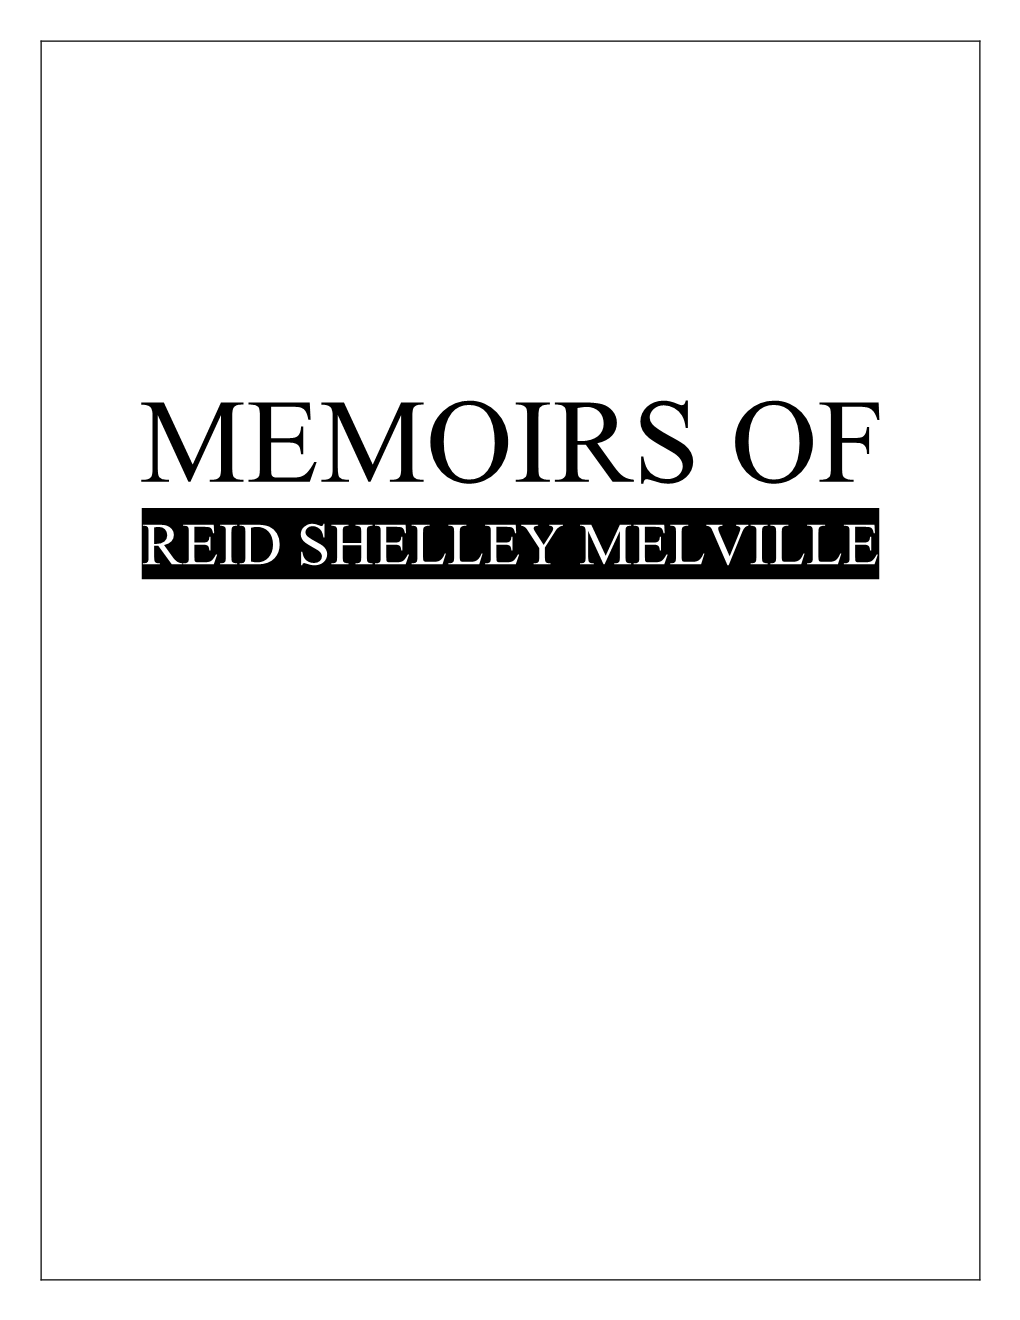 Reid Shelley Melville 2 3 Memoirs of Reid Shelley Melville